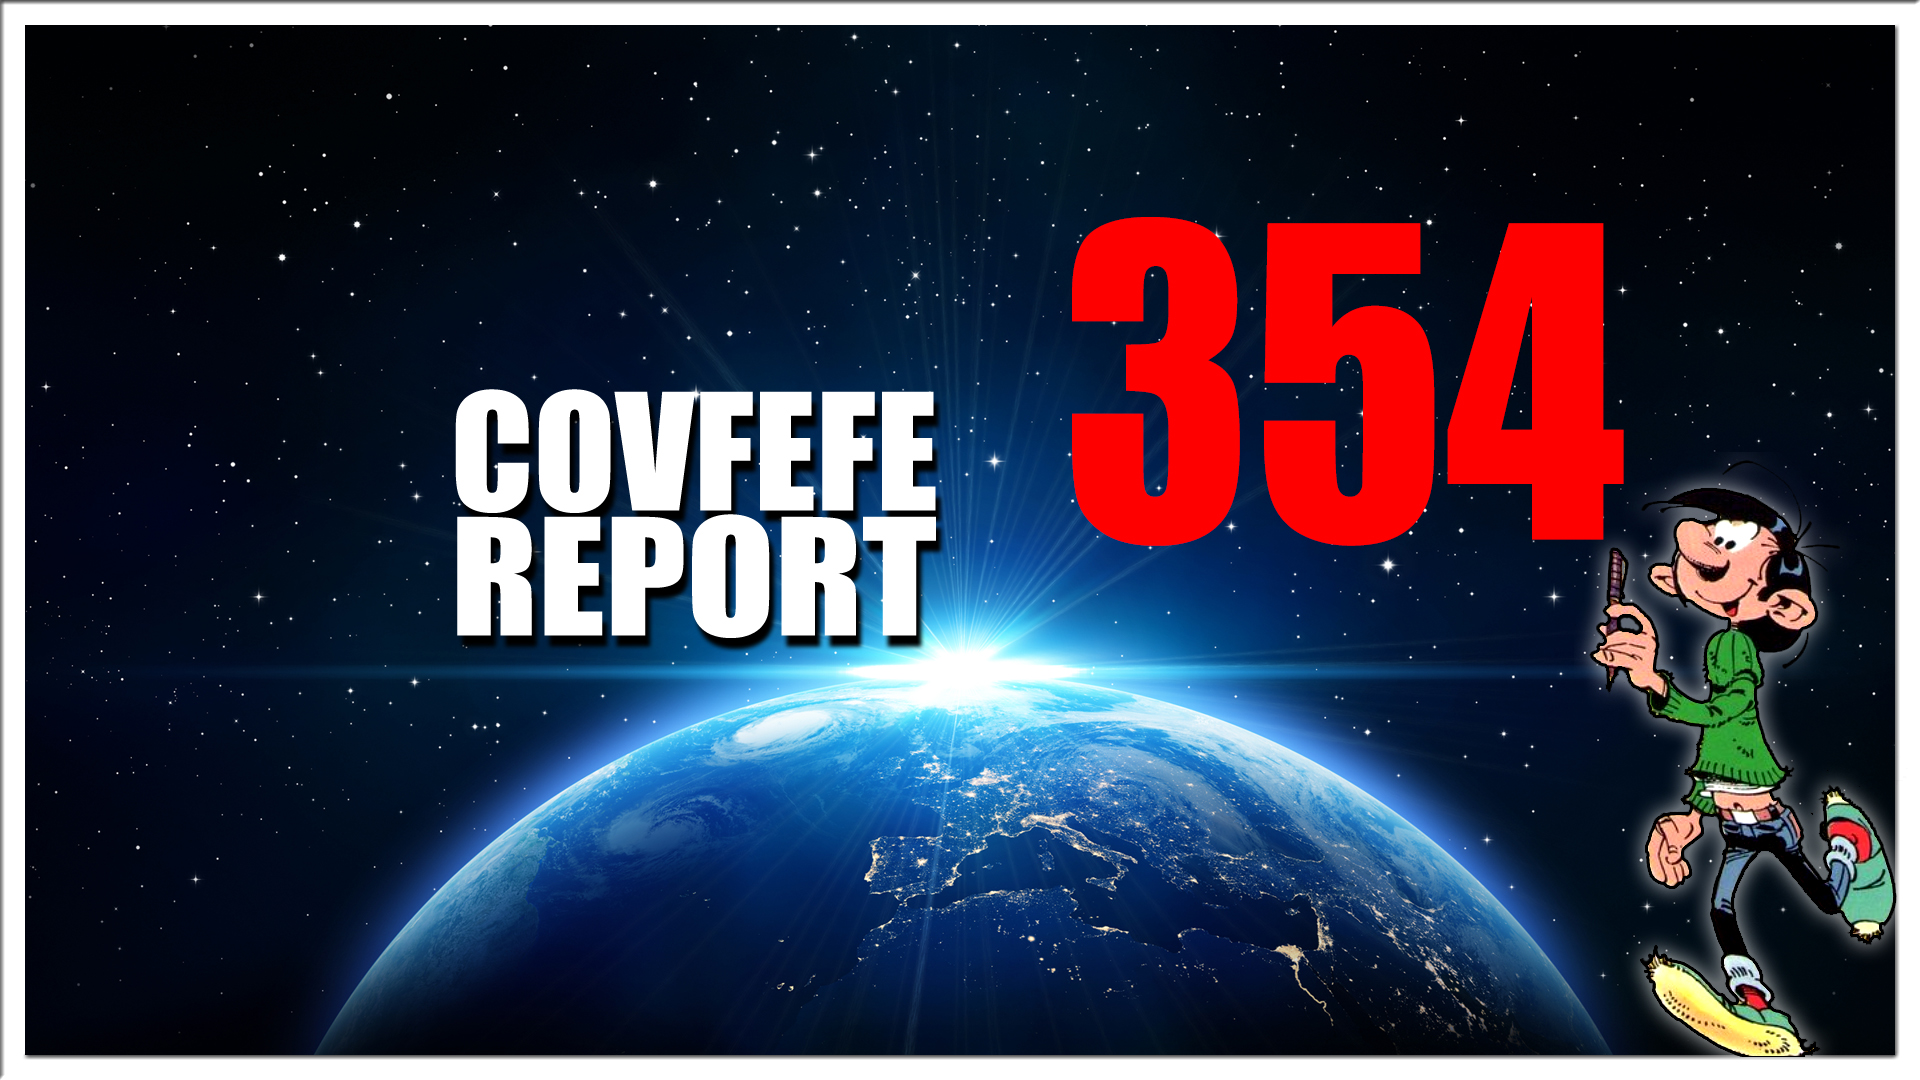 Covfefe Report 354. No fish, EU bribe, wrwy, Coffee-TalQ, Wappie-Geuzennaam, Avondklok, DJT bedreigt